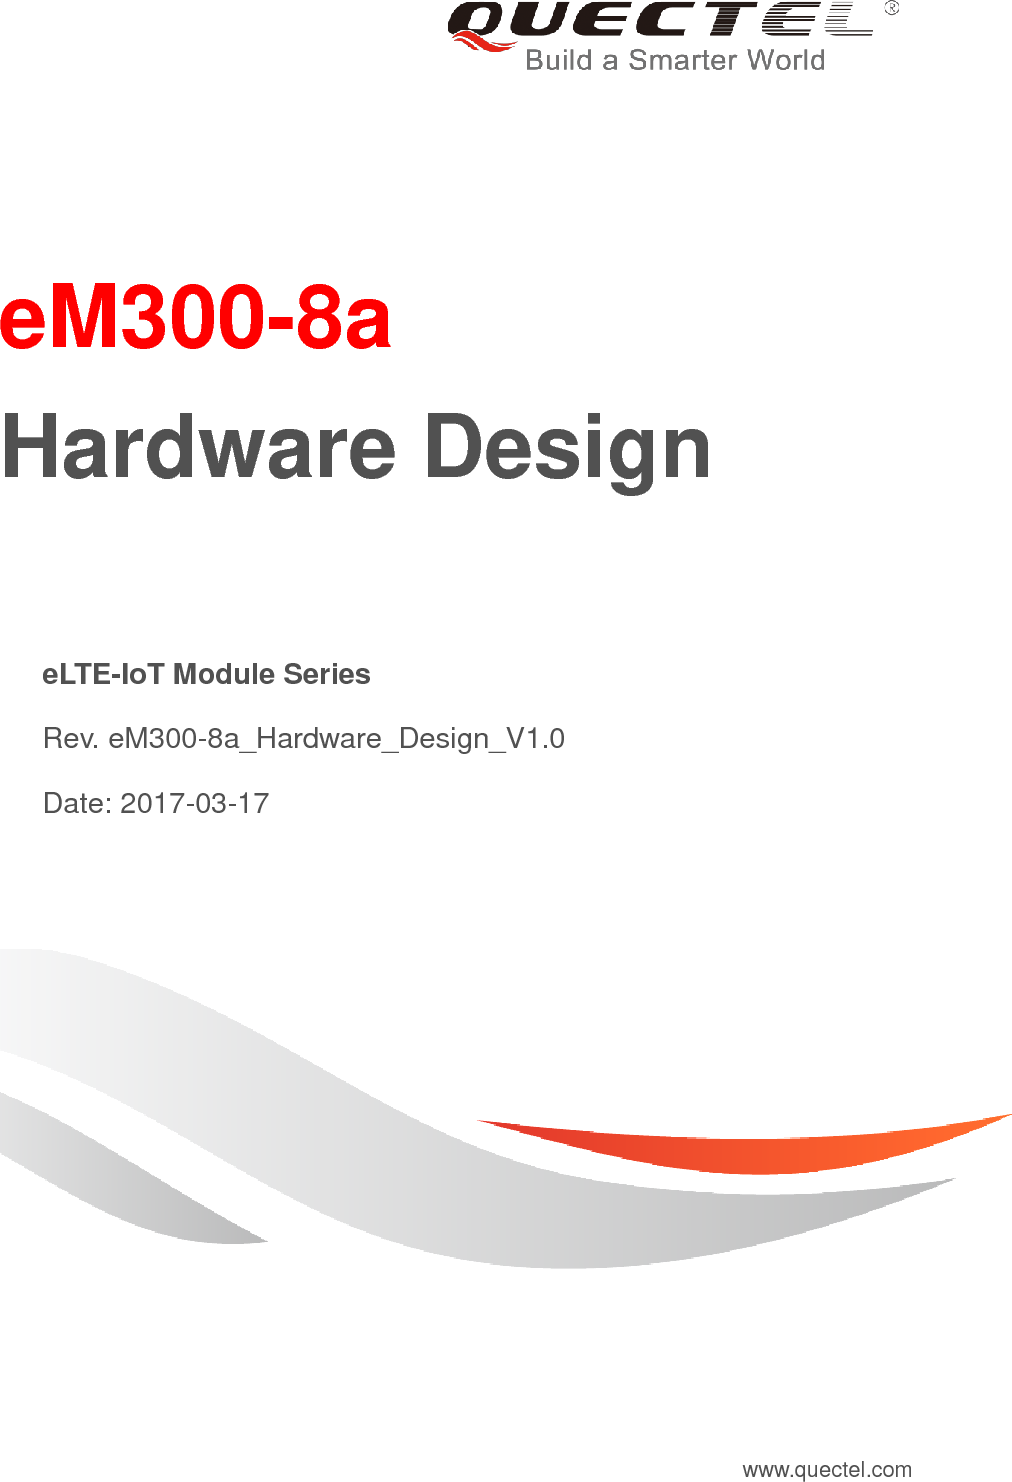     eM300-8a   Hardware Design   eLTE-IoT Module Series   Rev. eM300-8a_Hardware_Design_V1.0   Date: 2017-03-17 www.quectel.com 